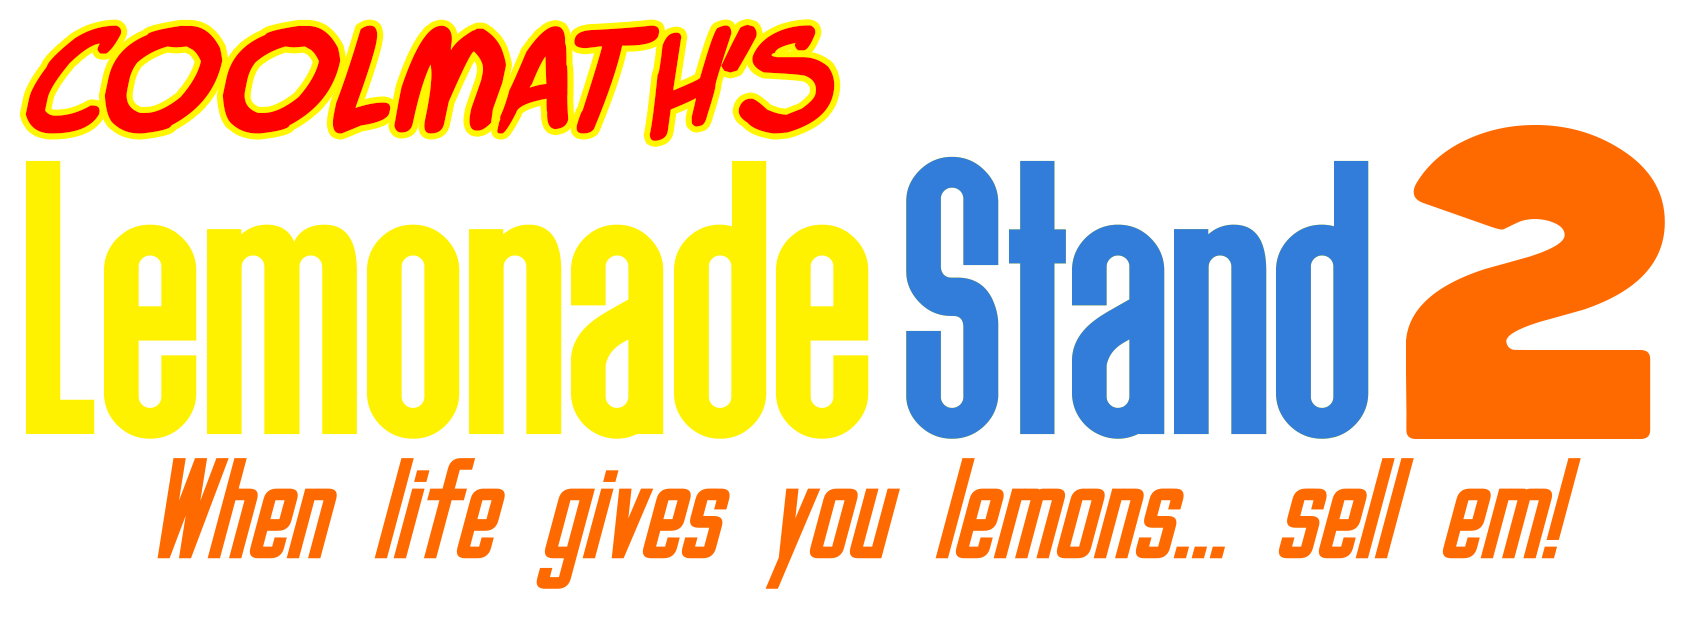 lemonade stand cool math games classic